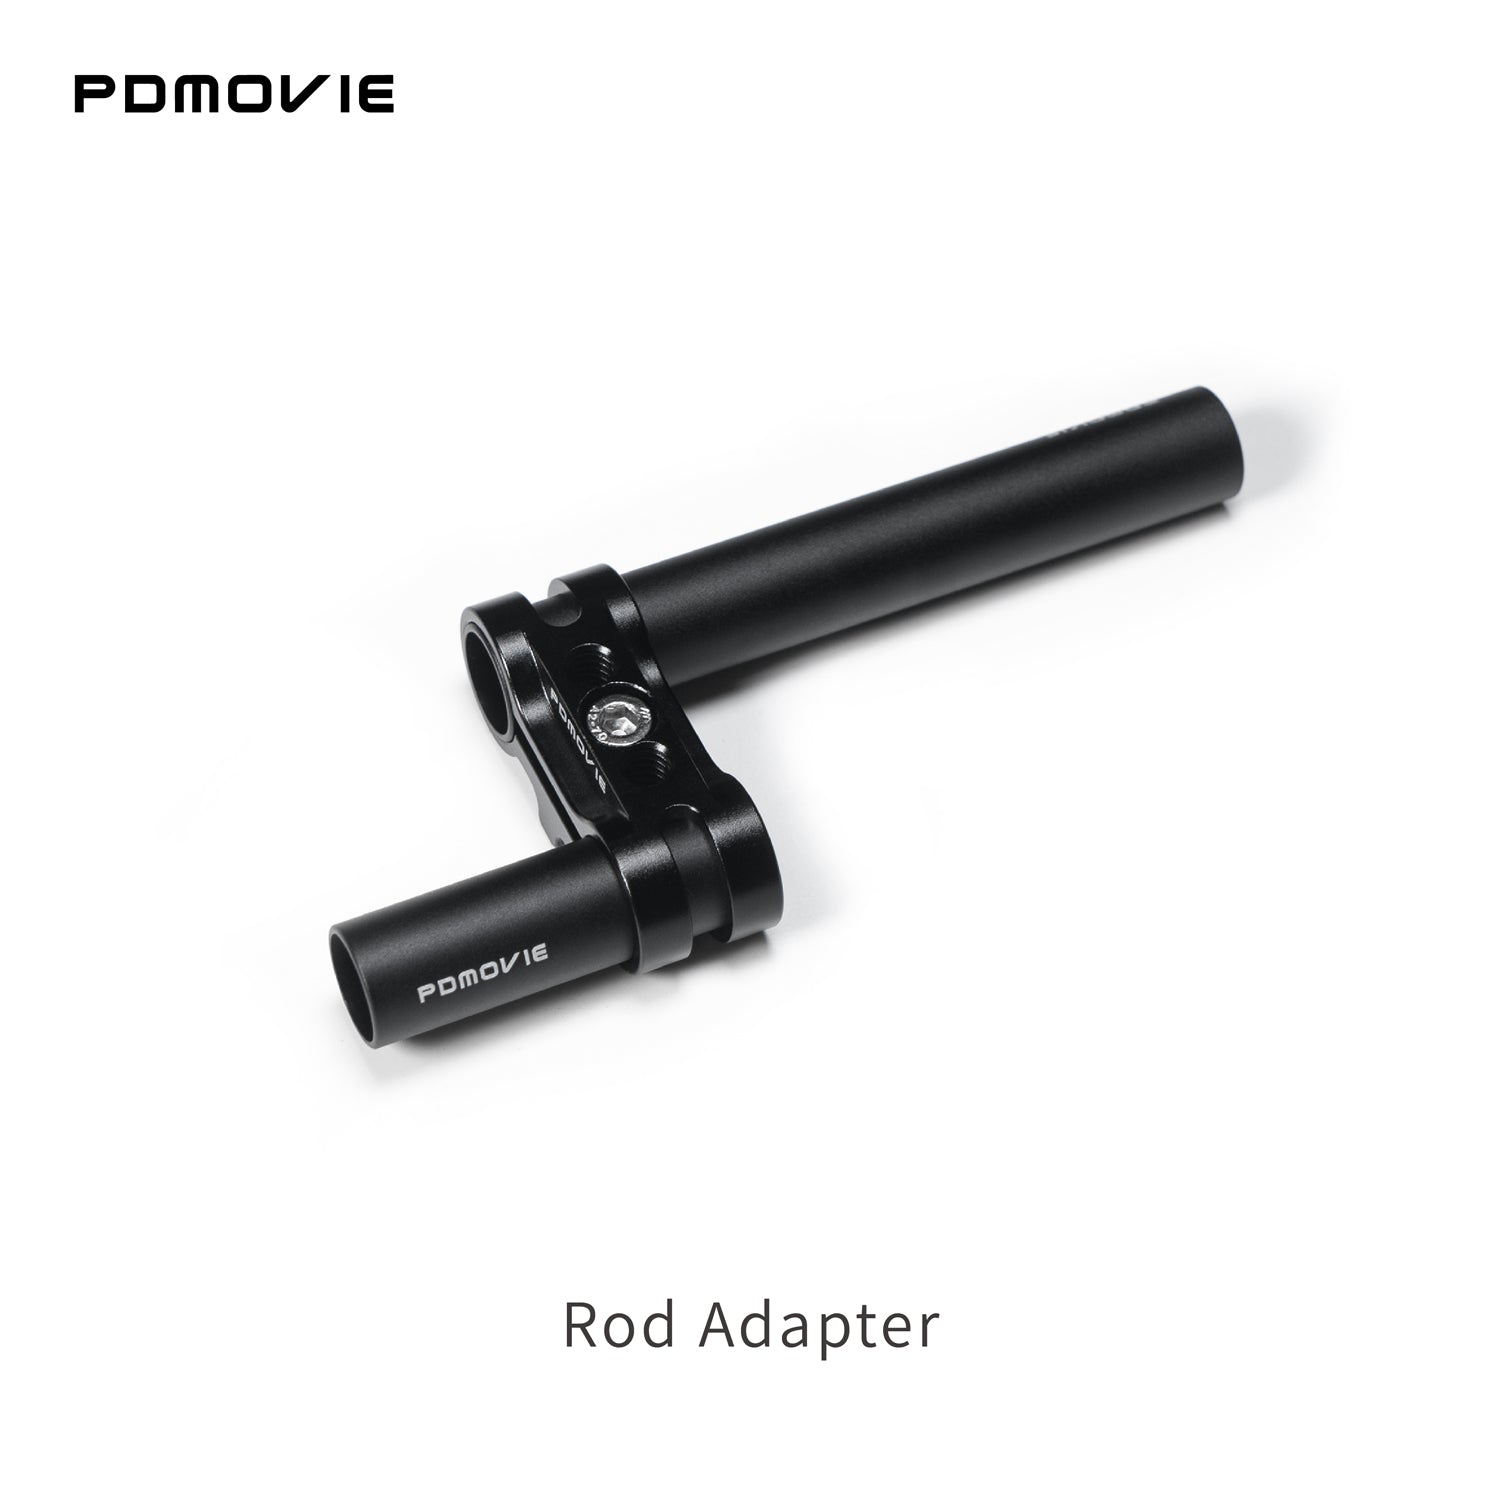 Rod Adapter